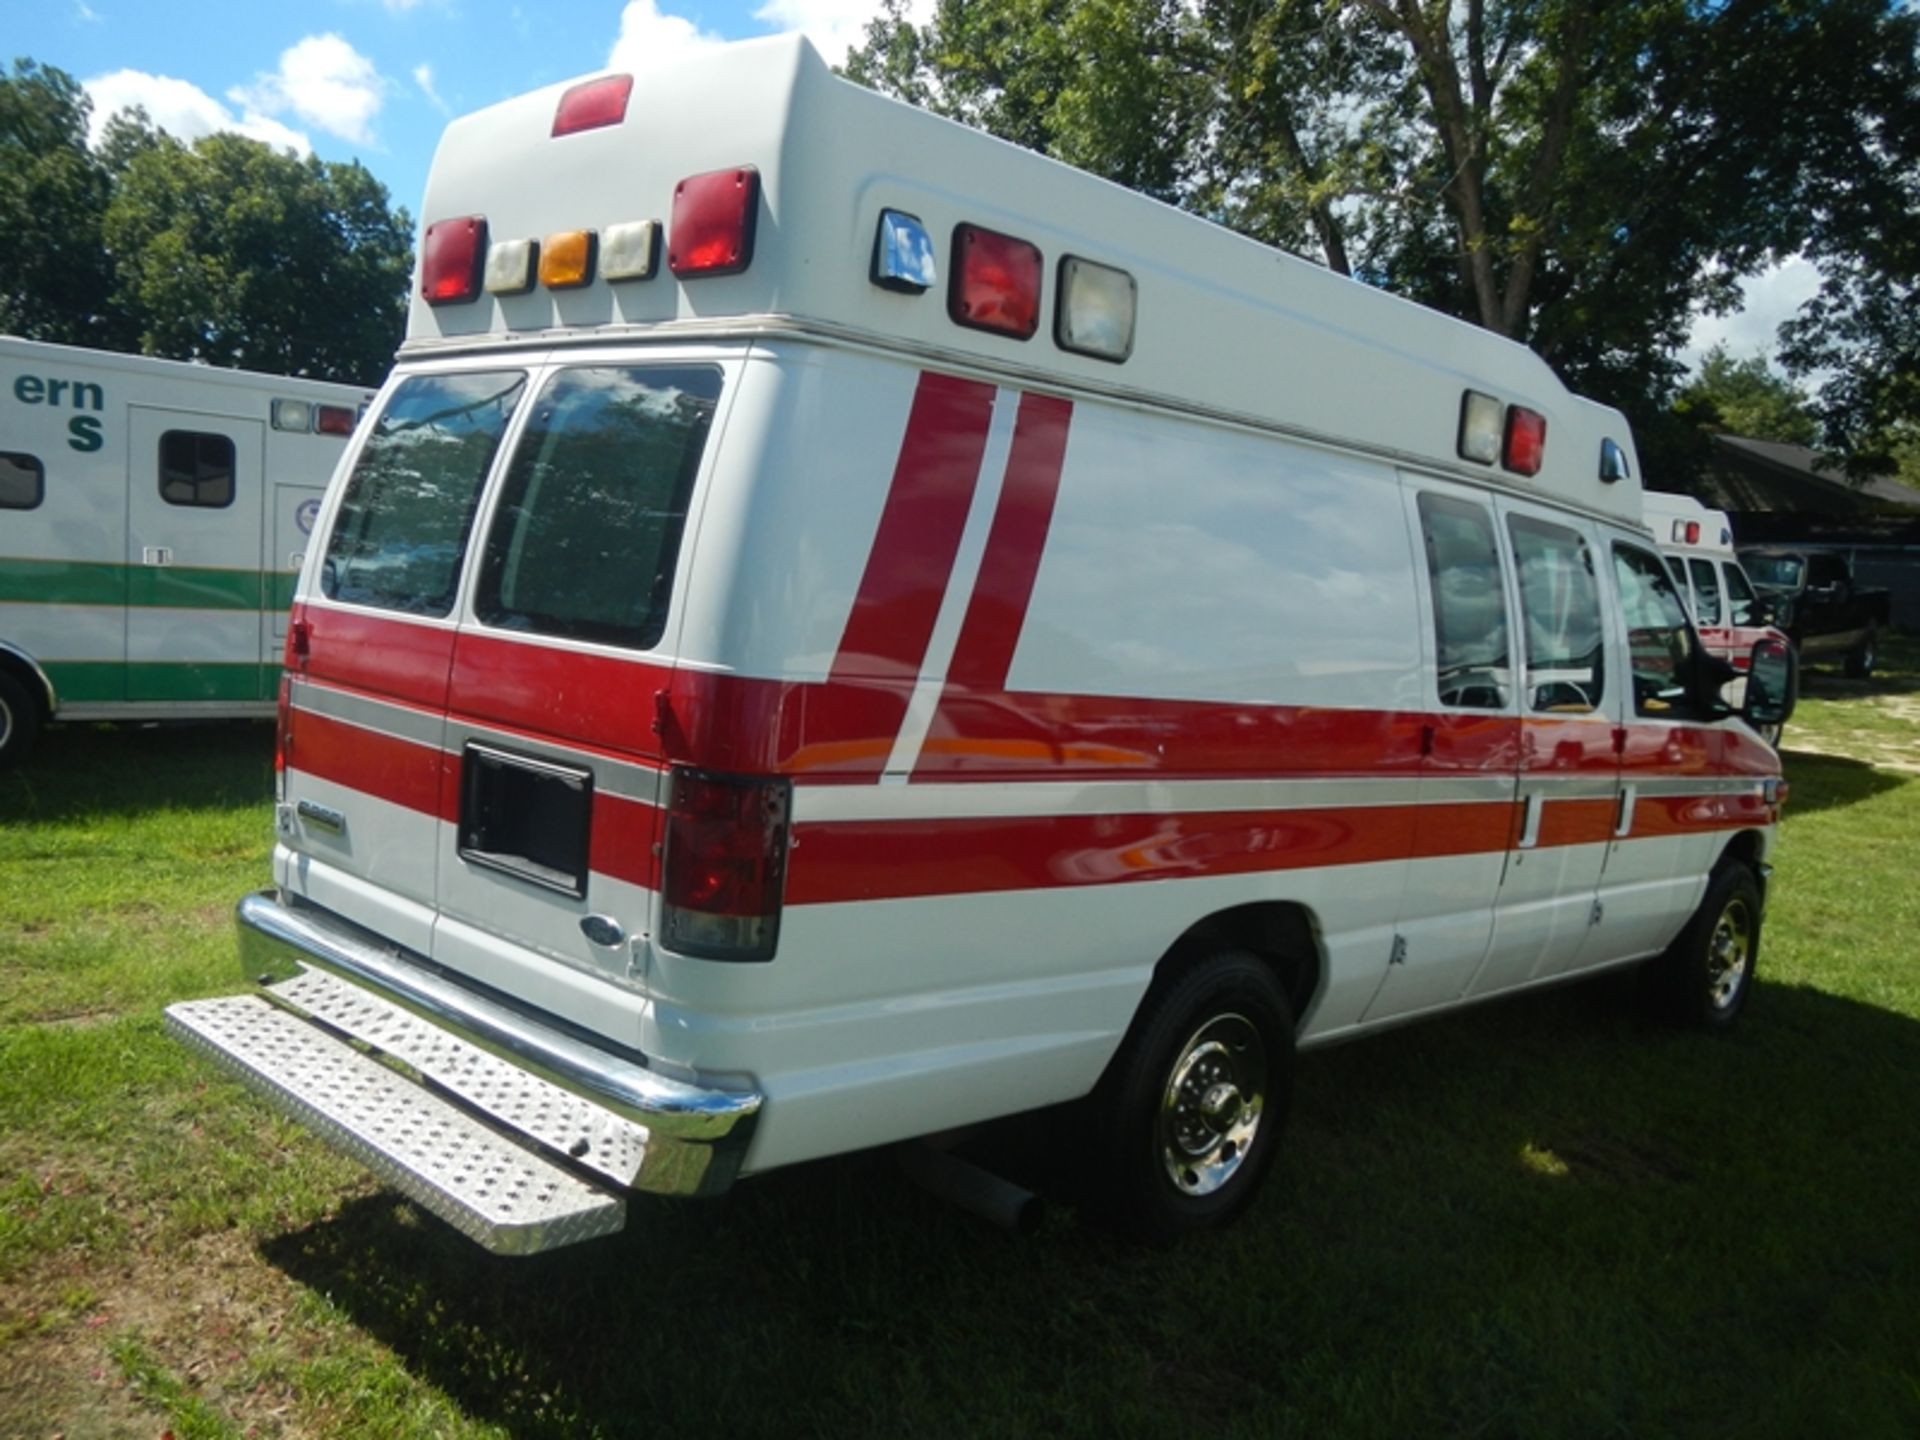 2010 Ford E350 Super Duty Type II Ambulance, dsl 220,124 miles - VIN: 1FDSS3EP6ADA41944 - Image 3 of 6